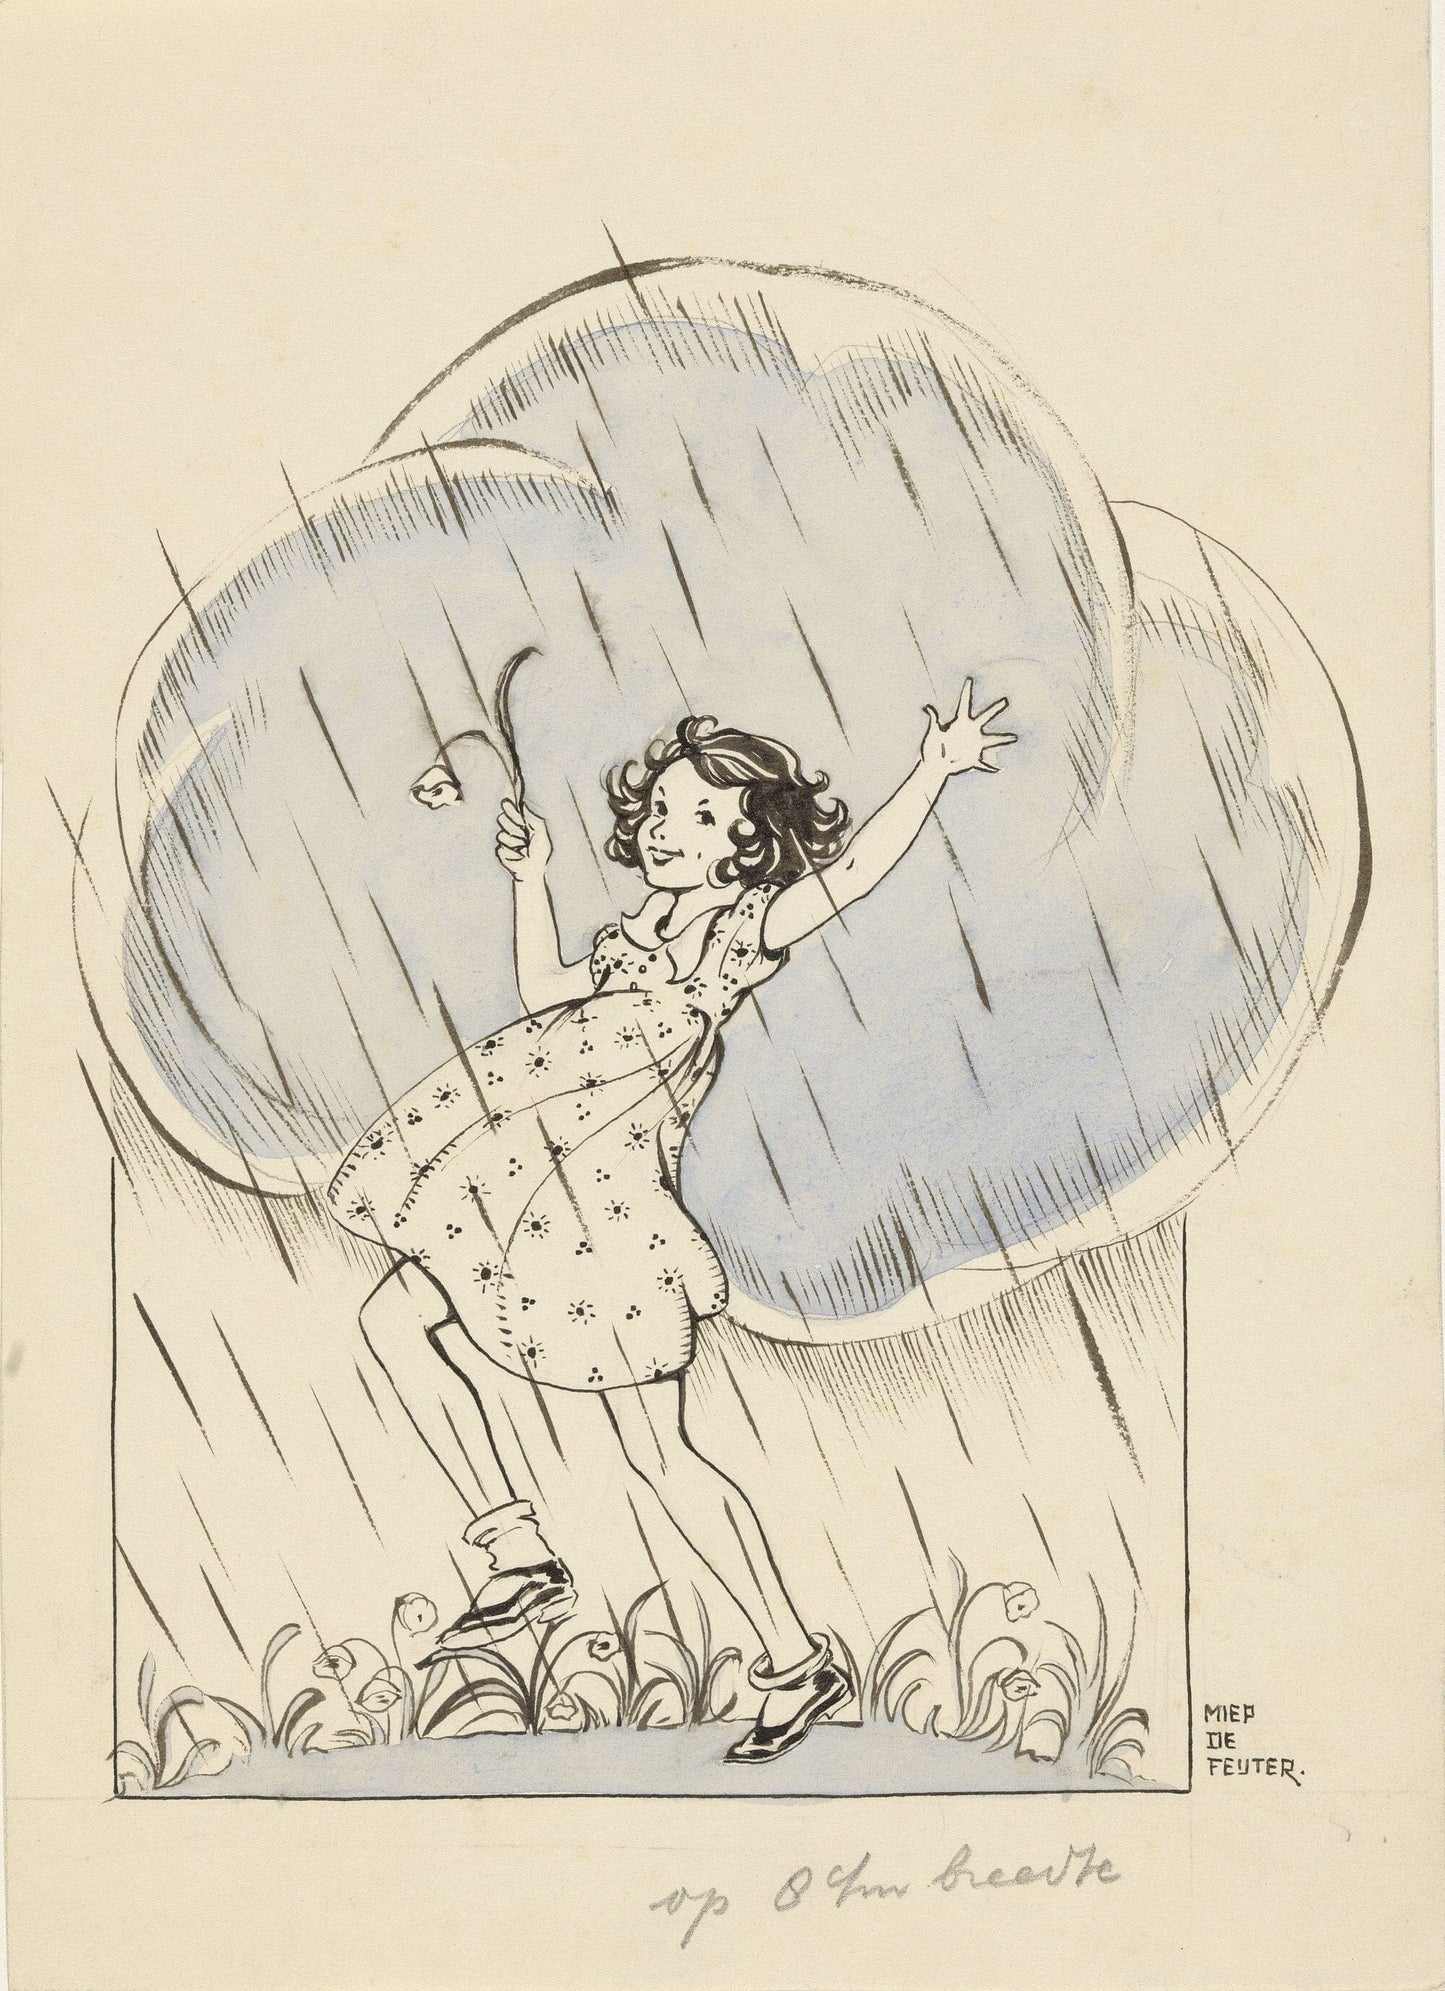 Dancing in the rain artwork (1930s) | Miep de Feijter Posters, Prints, & Visual Artwork The Trumpet Shop   